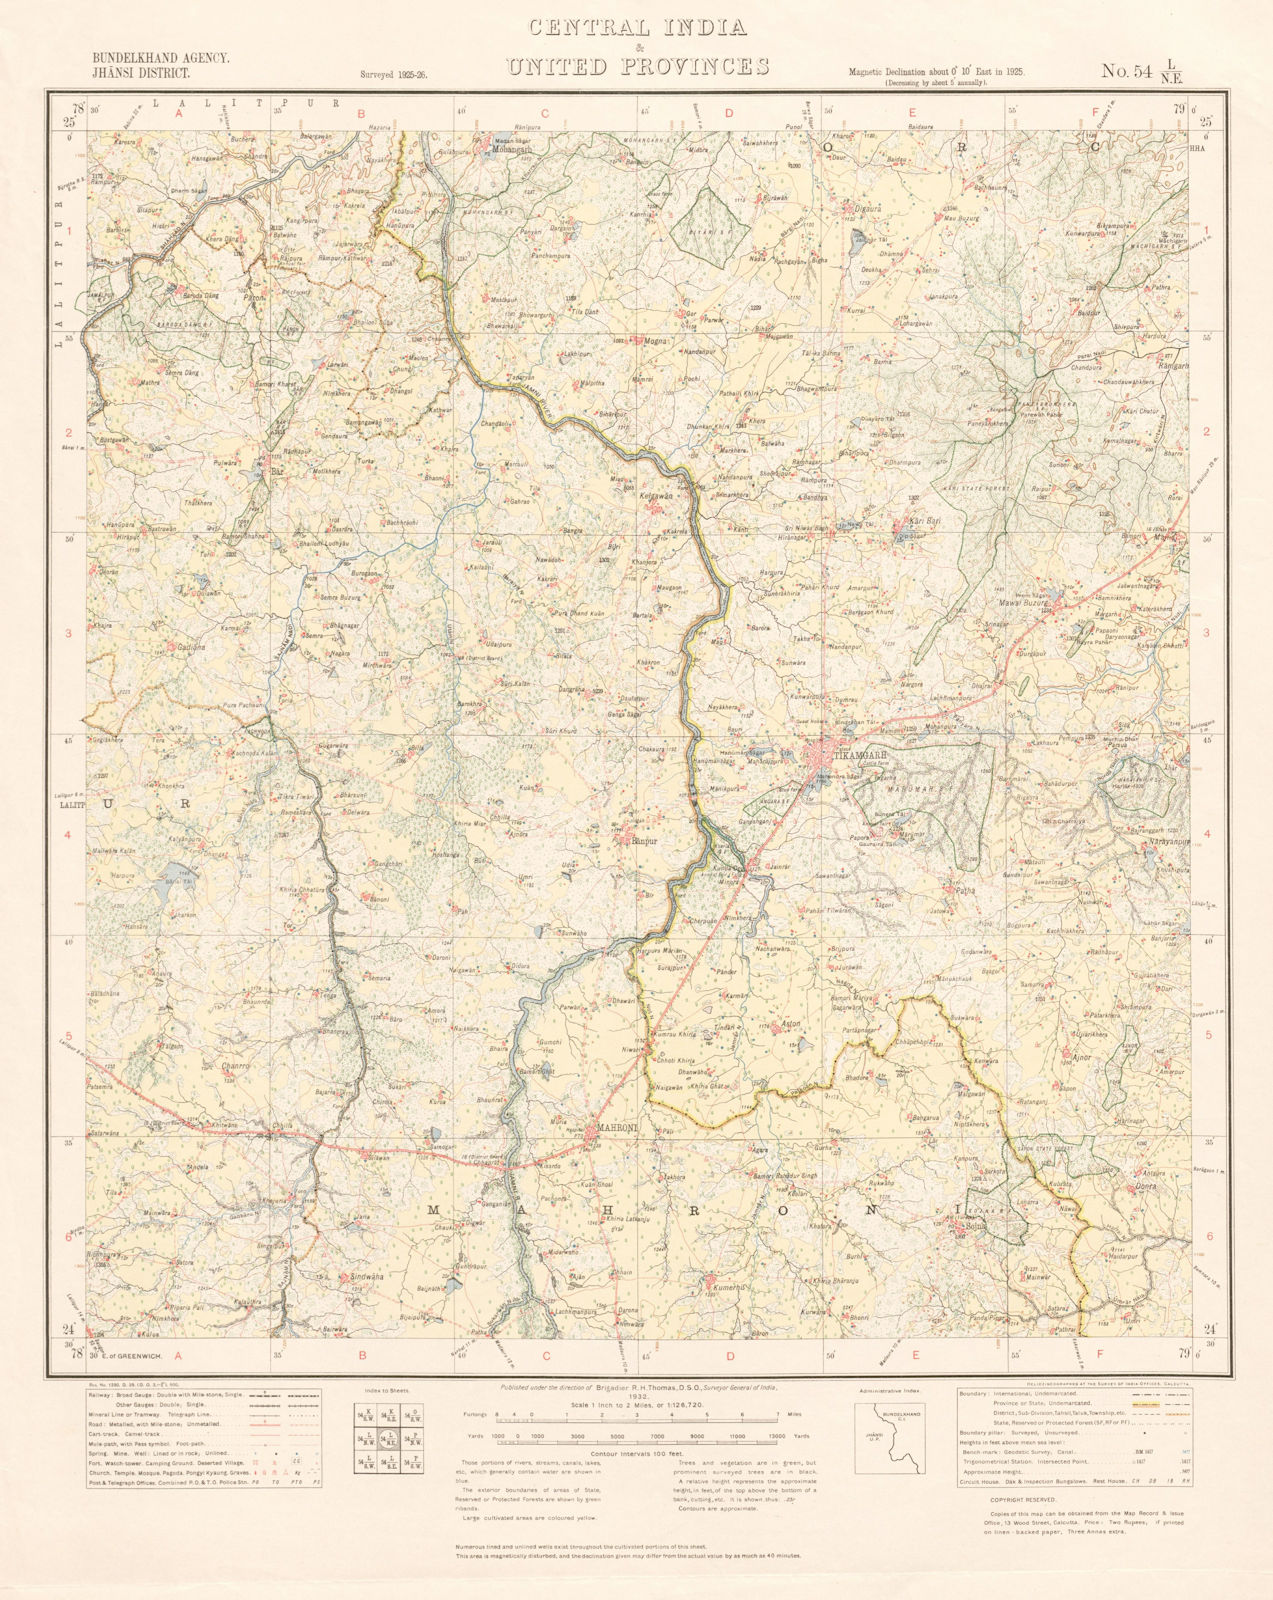 SURVEY OF INDIA 54 L/NE Madhya Pradesh Tikamgarh Mahrauni Jamni River 1932 map